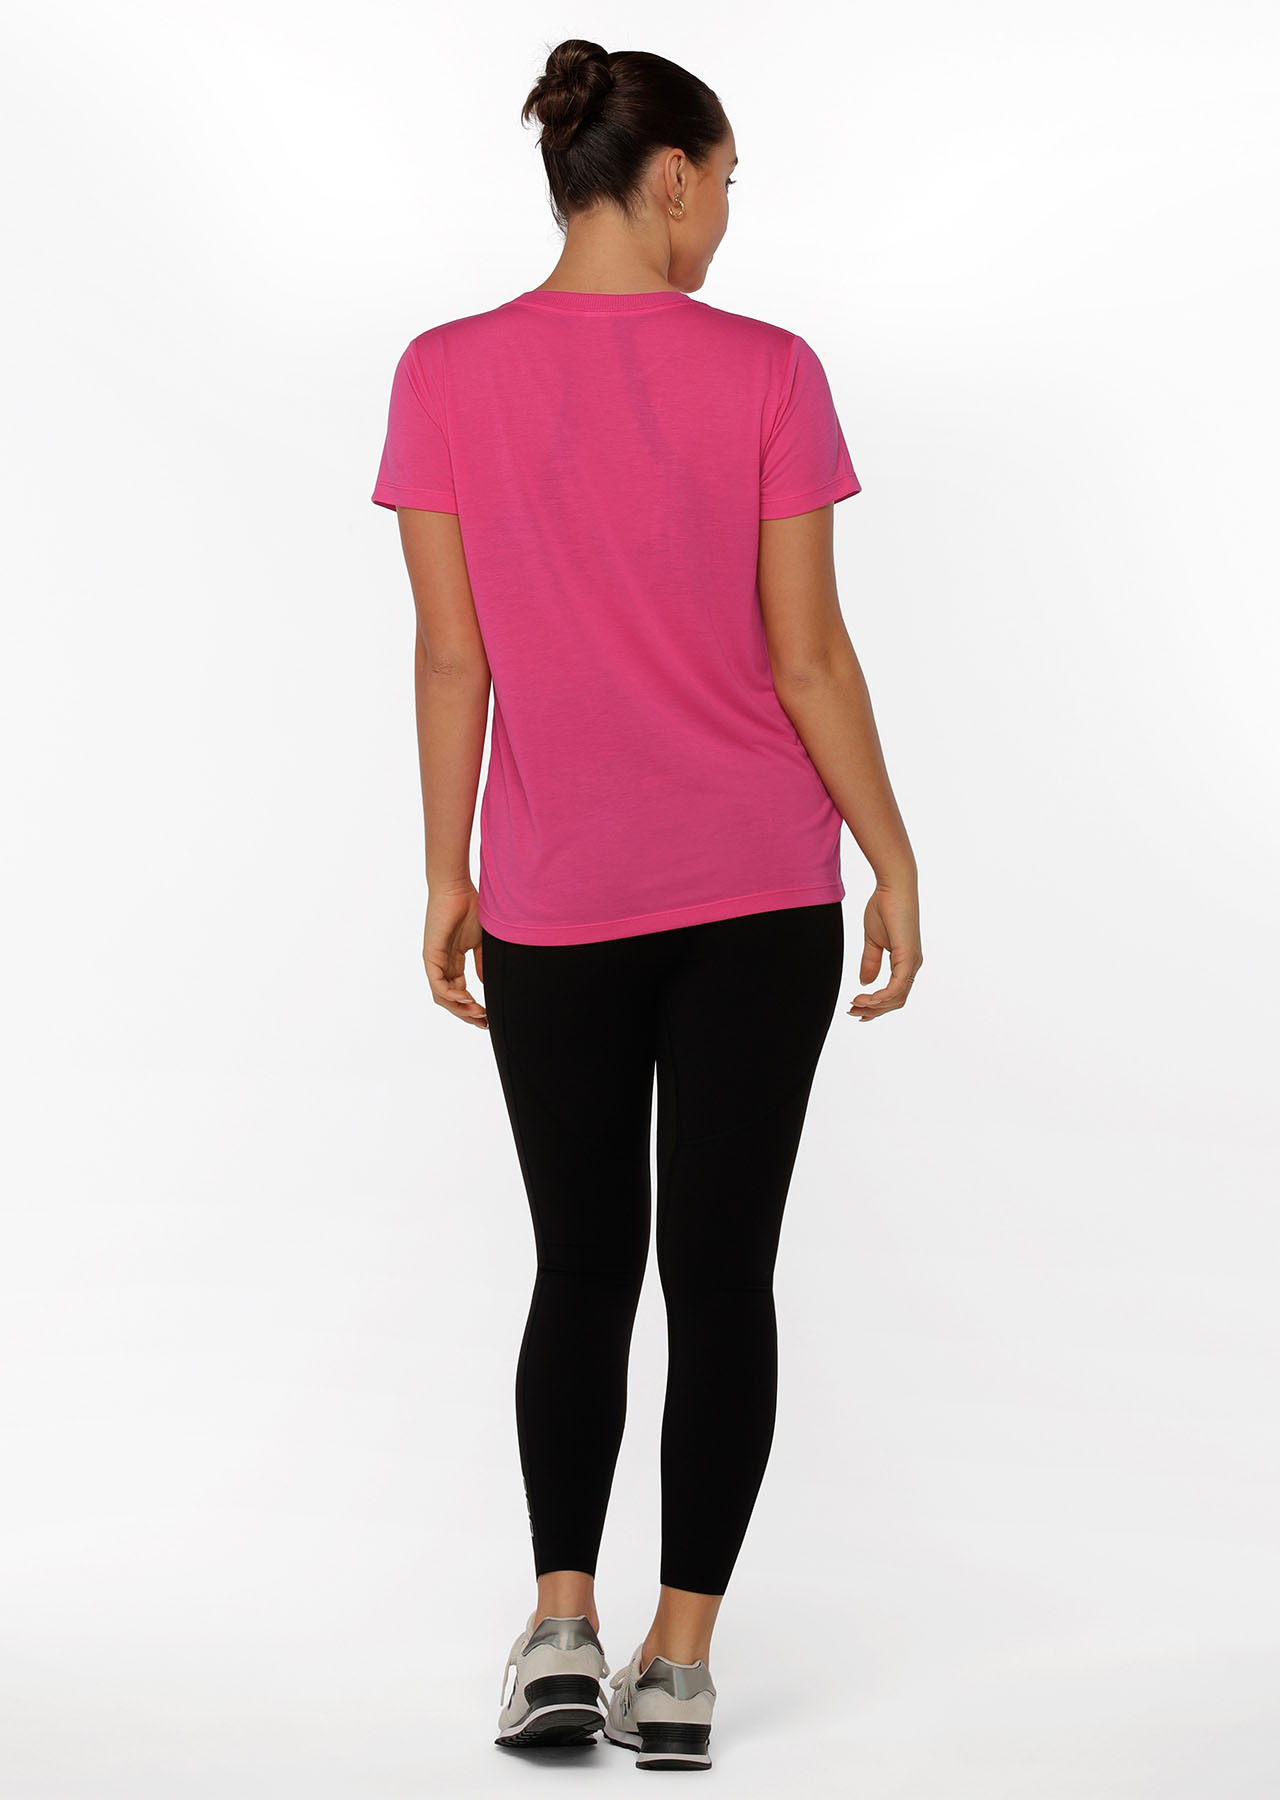 Lotus T-Shirt | Pink | Lorna Jane USA